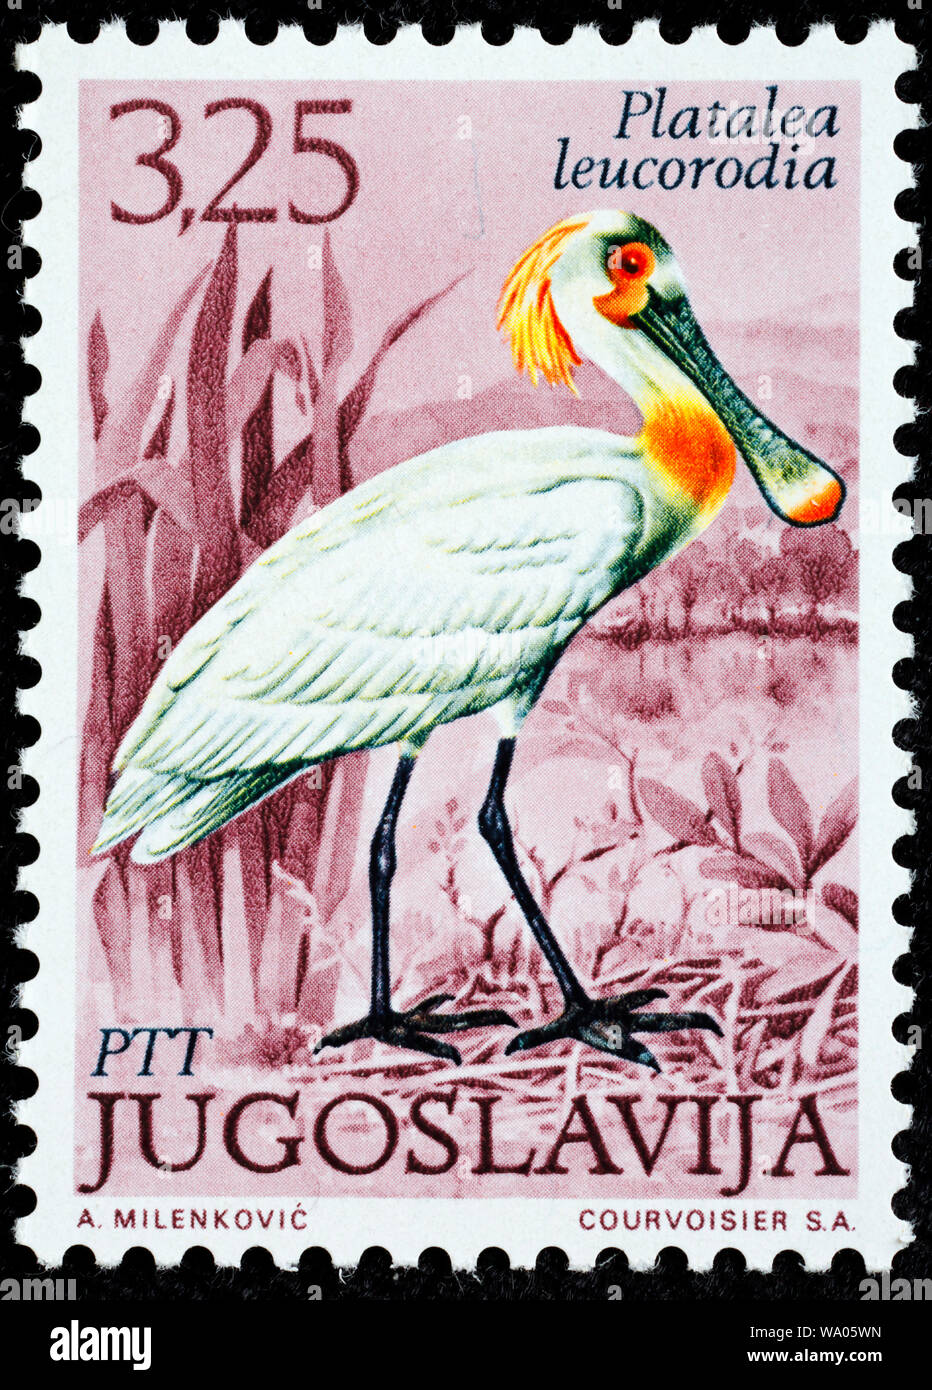 Common Spoonbill, Platalea leucorodia, postage stamp, Yugoslavia, 1972 Stock Photo